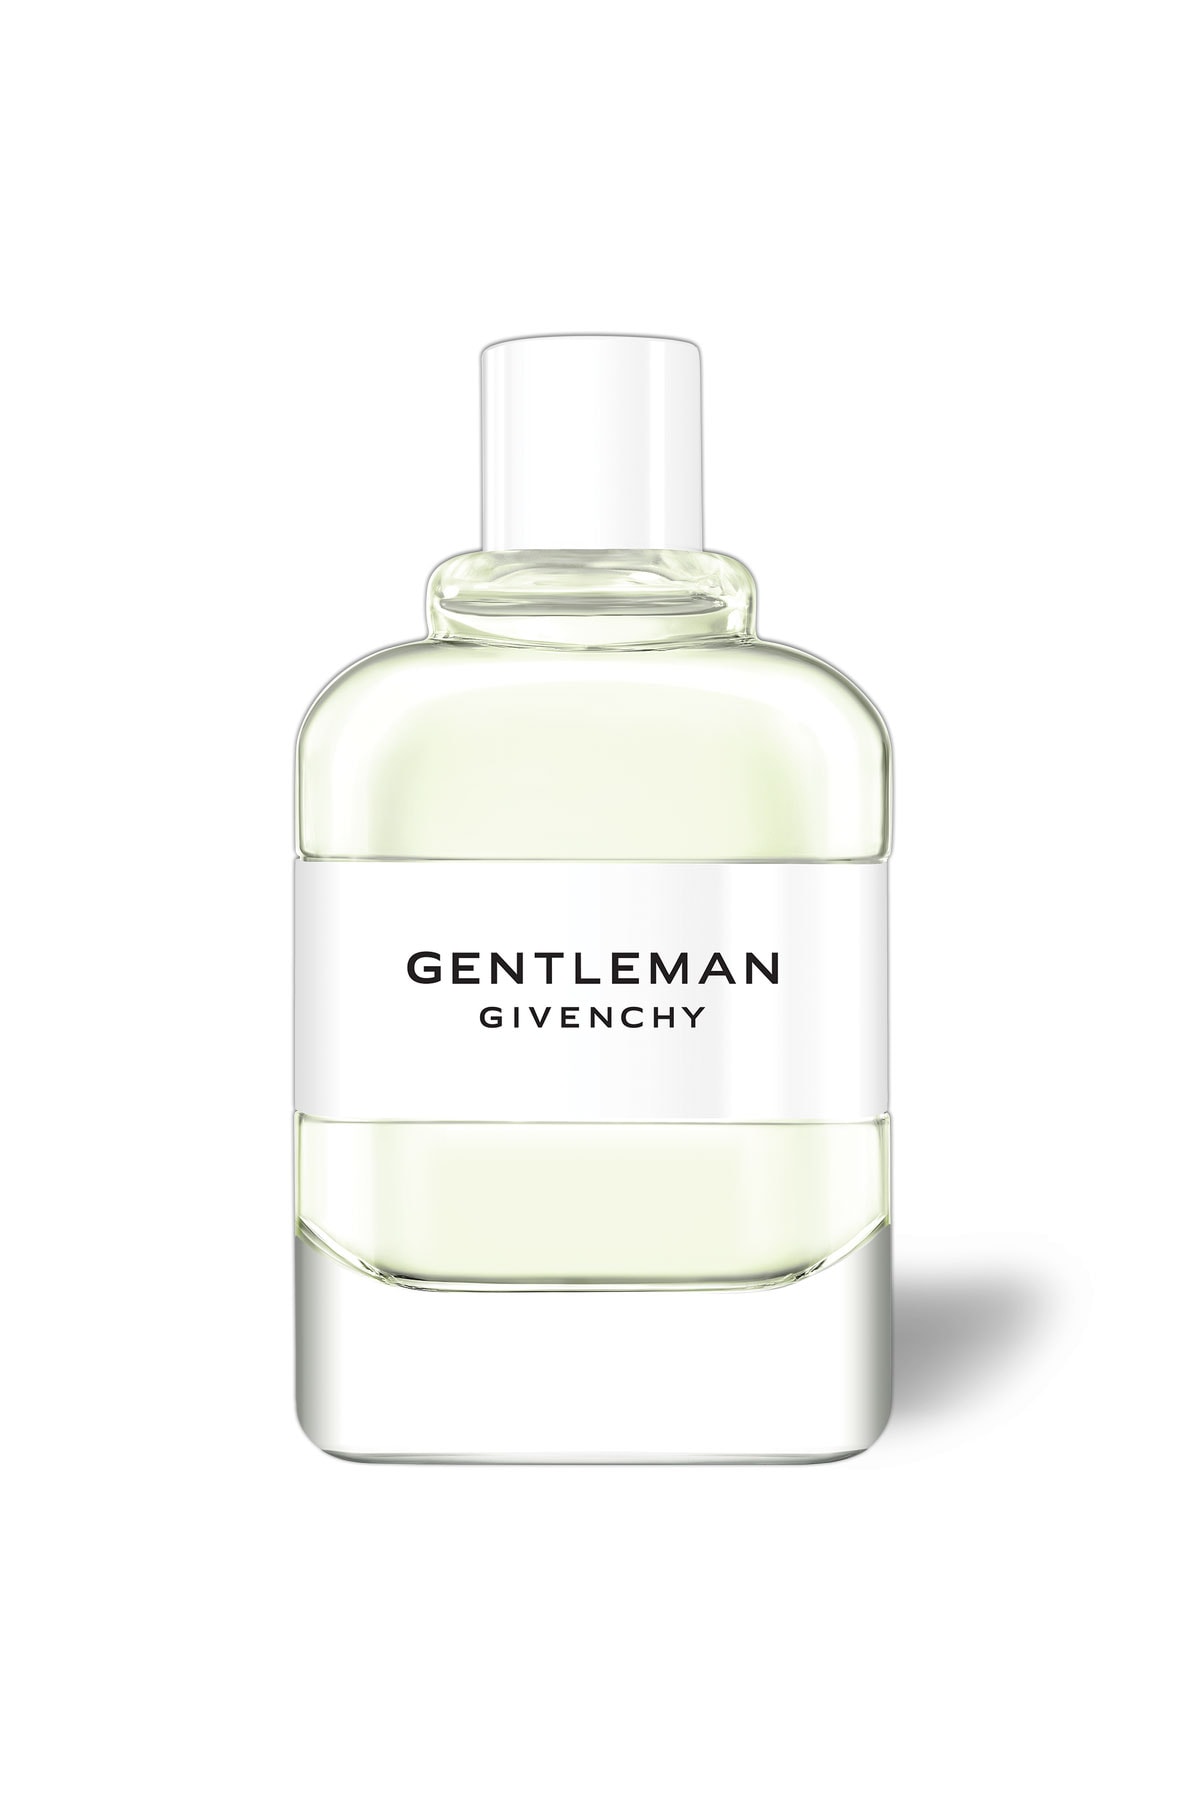 Gentleman Givenchy Cologne » Givenchy » The Parfumerie » Sri Lanka